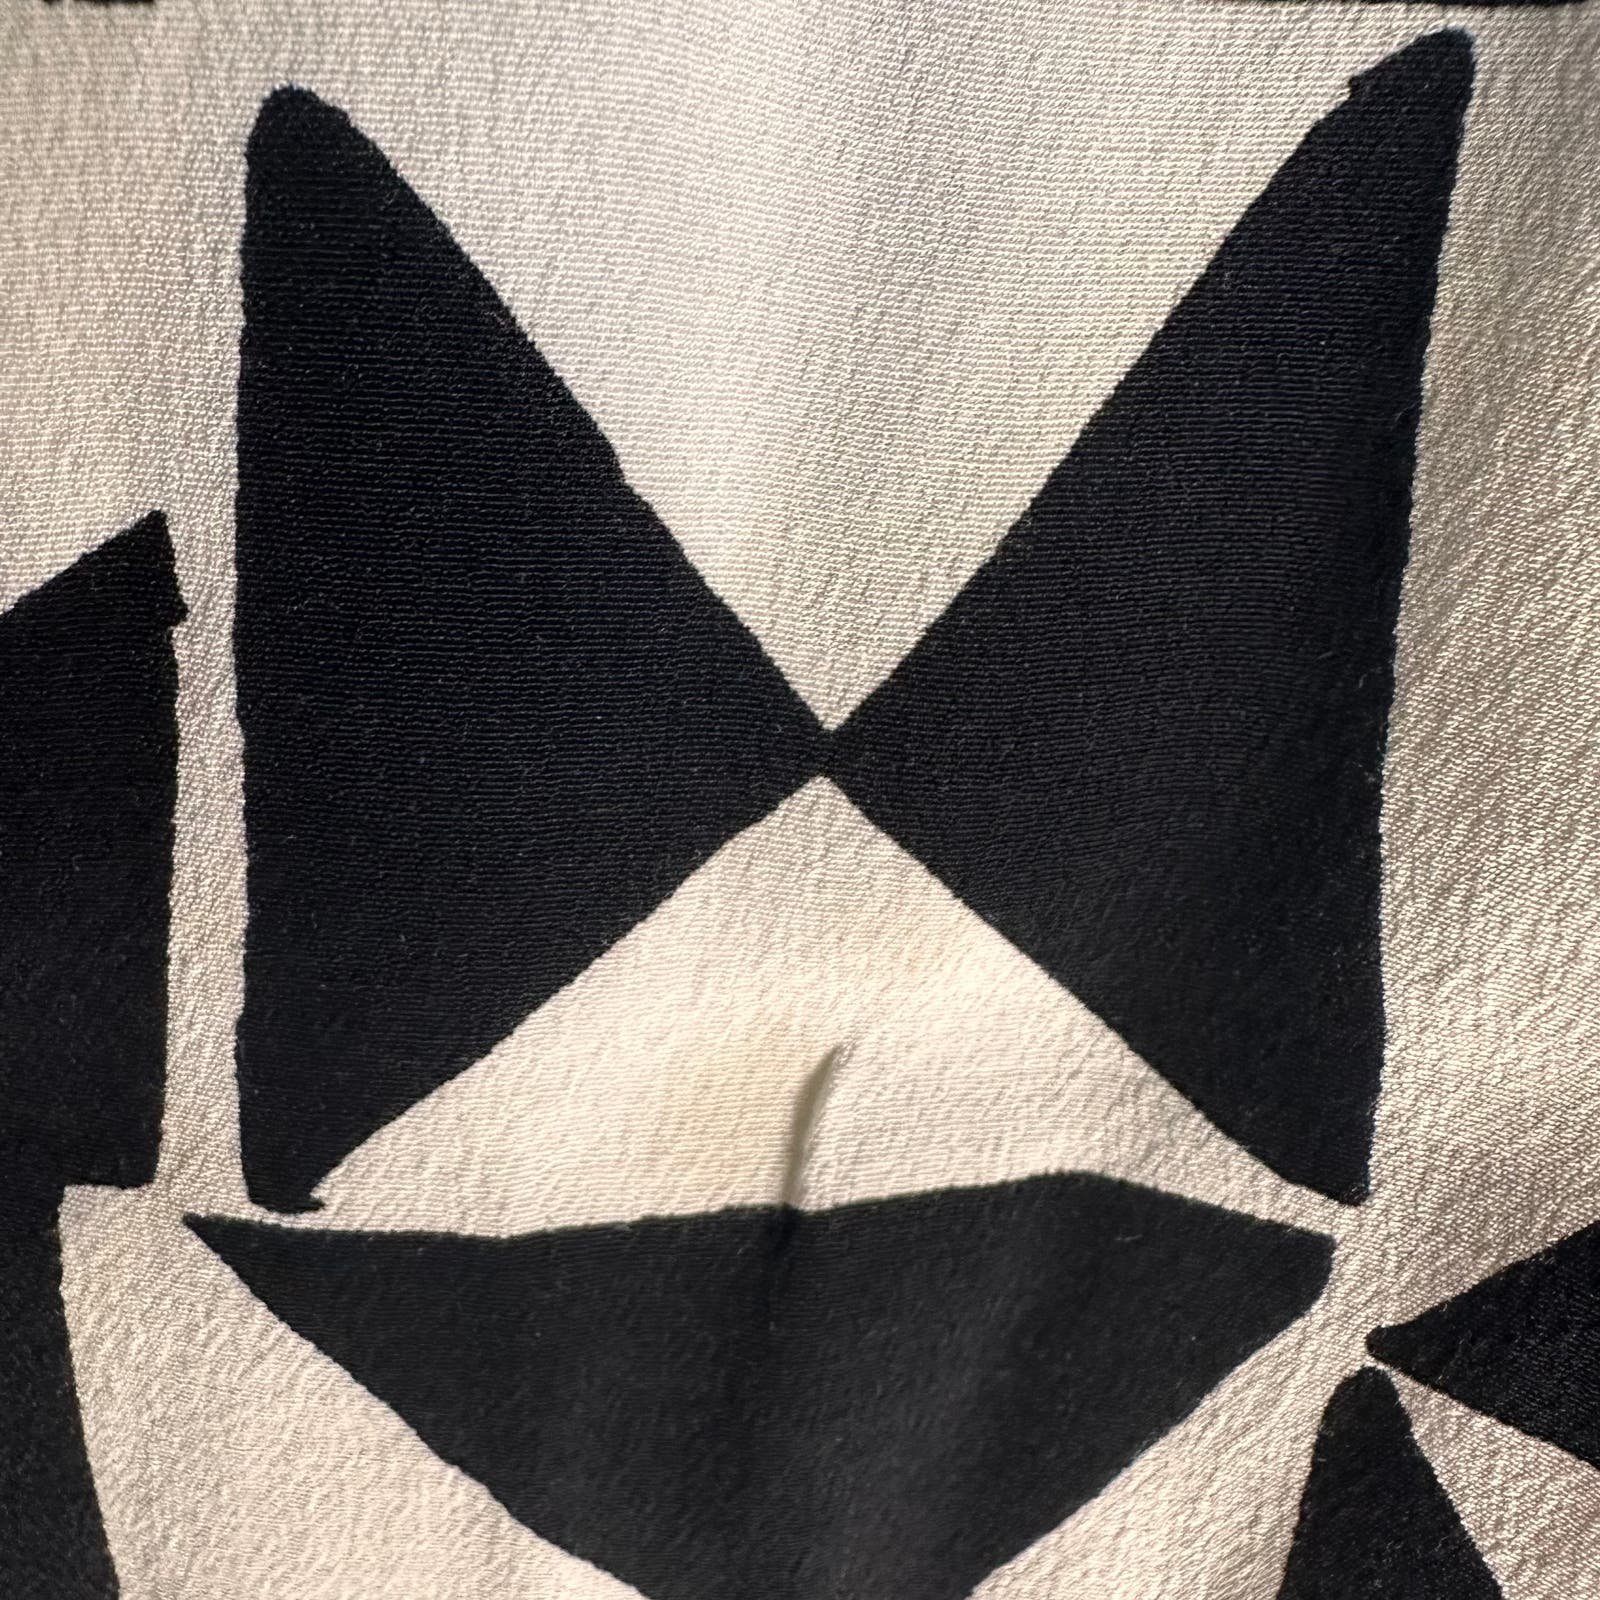 Stylish LOFT Black White A-Line Geometric Pattern Lined Rayon Skirt Size Medium nyNgjswQa Online Shop